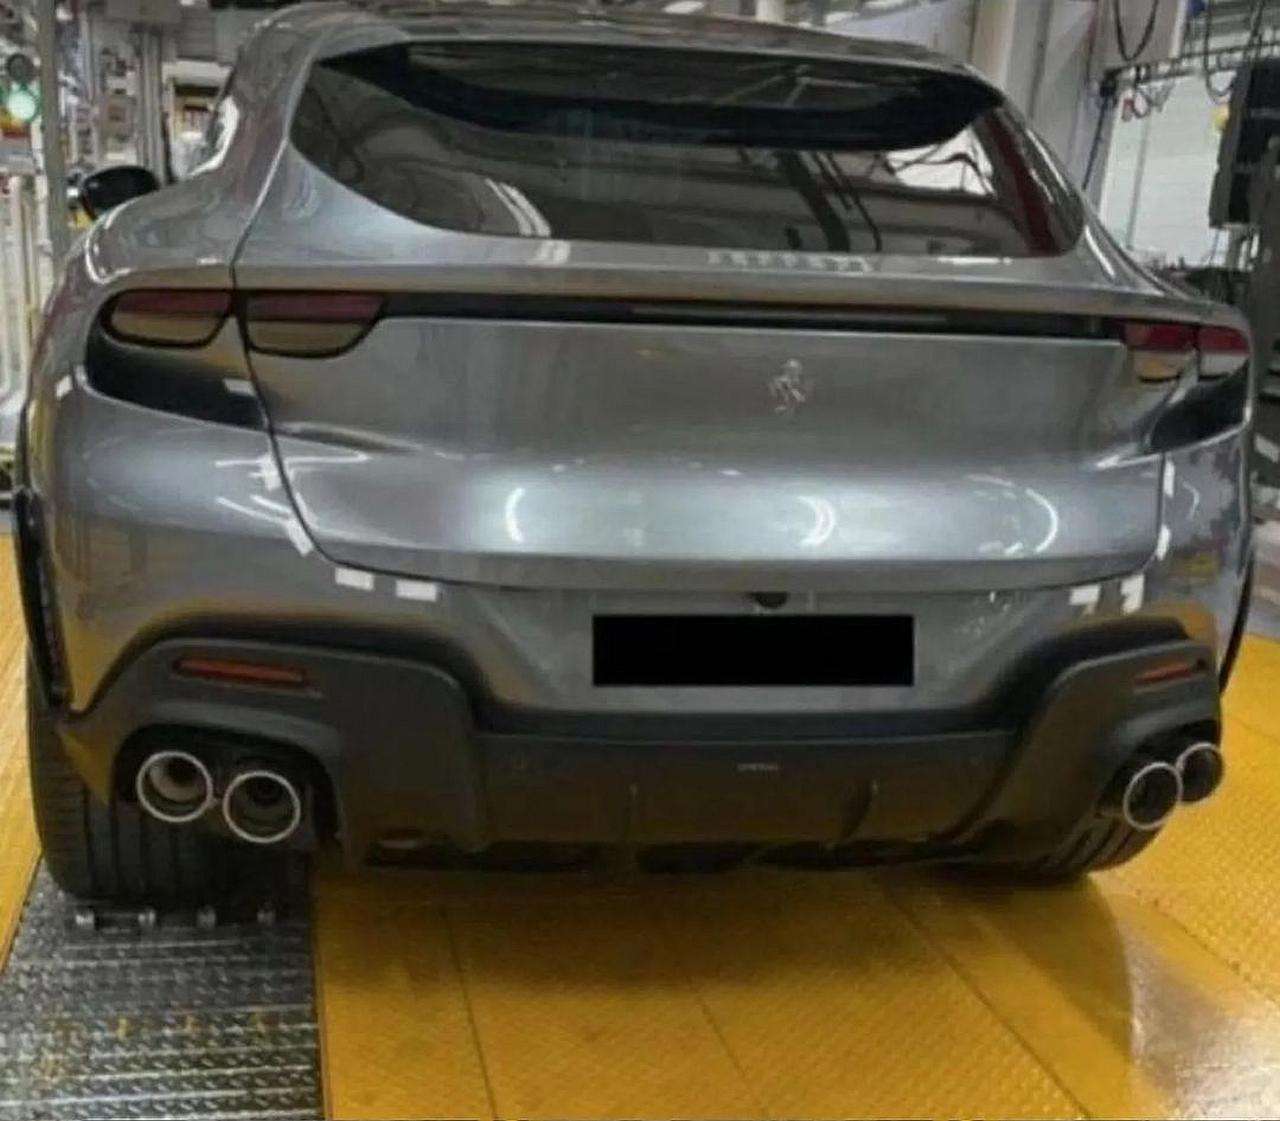 Ferrari Purosangue SUV-leaked-image-rear-1